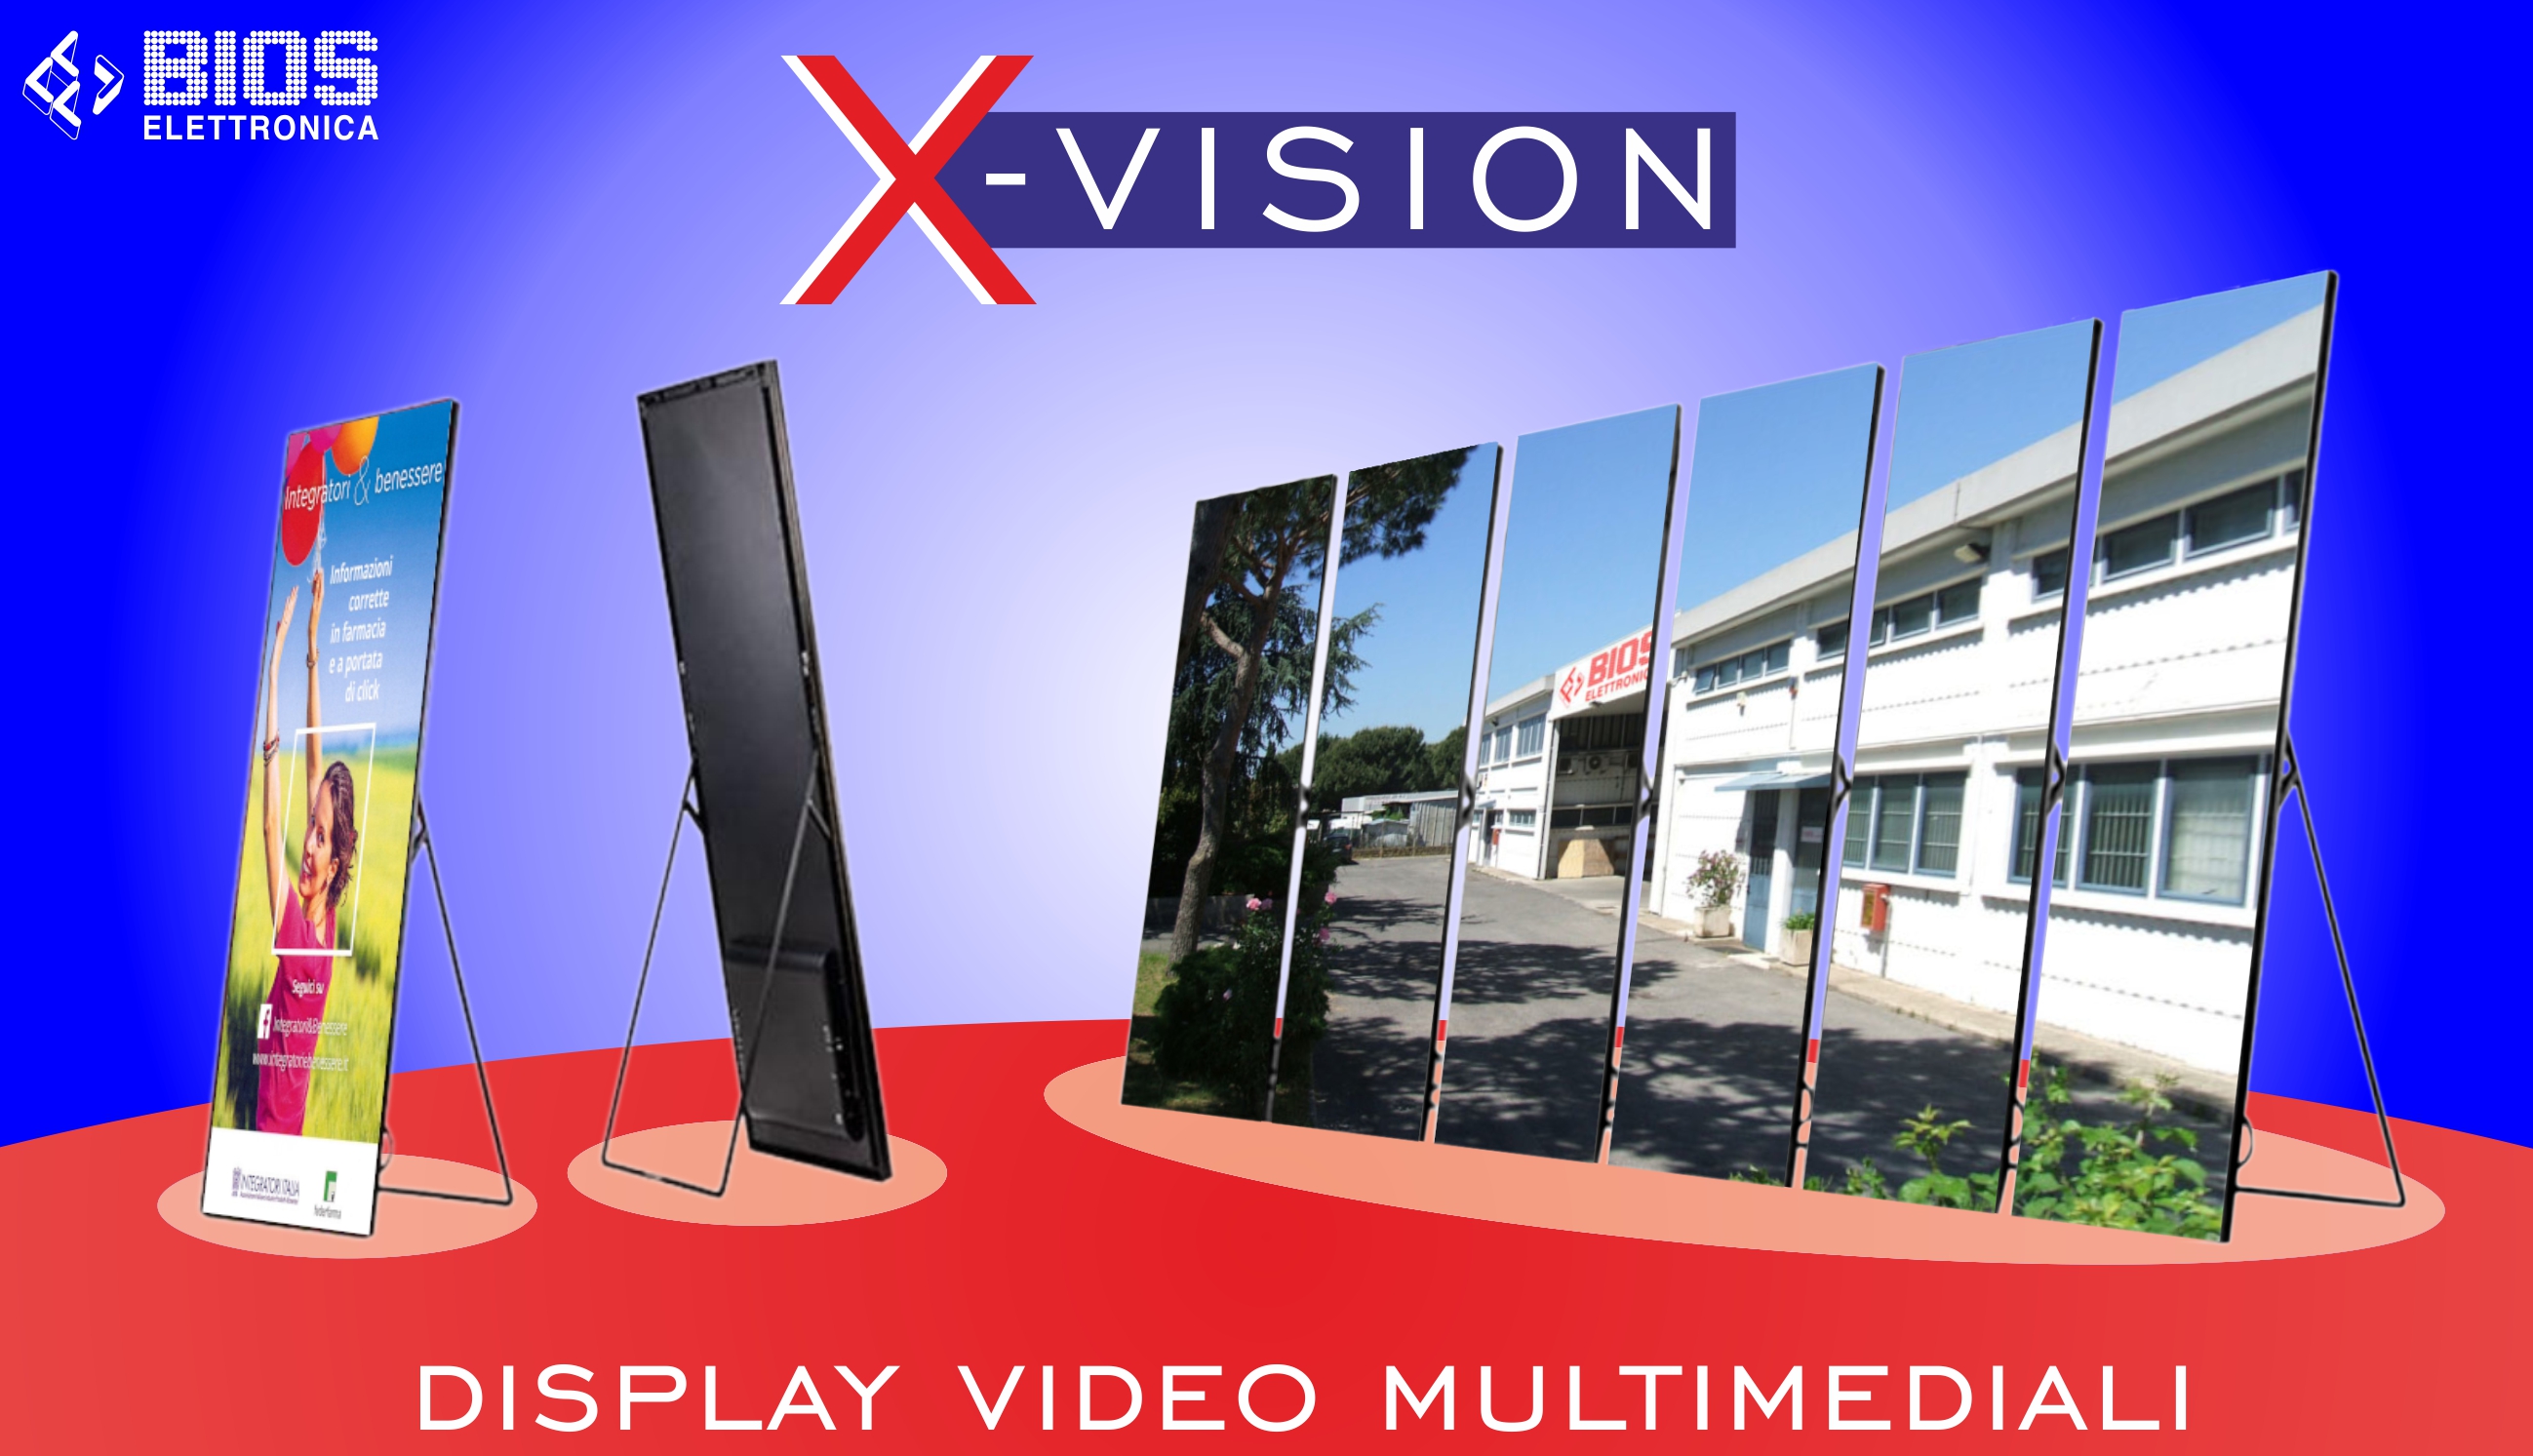 X-VISION - multimedia video displays